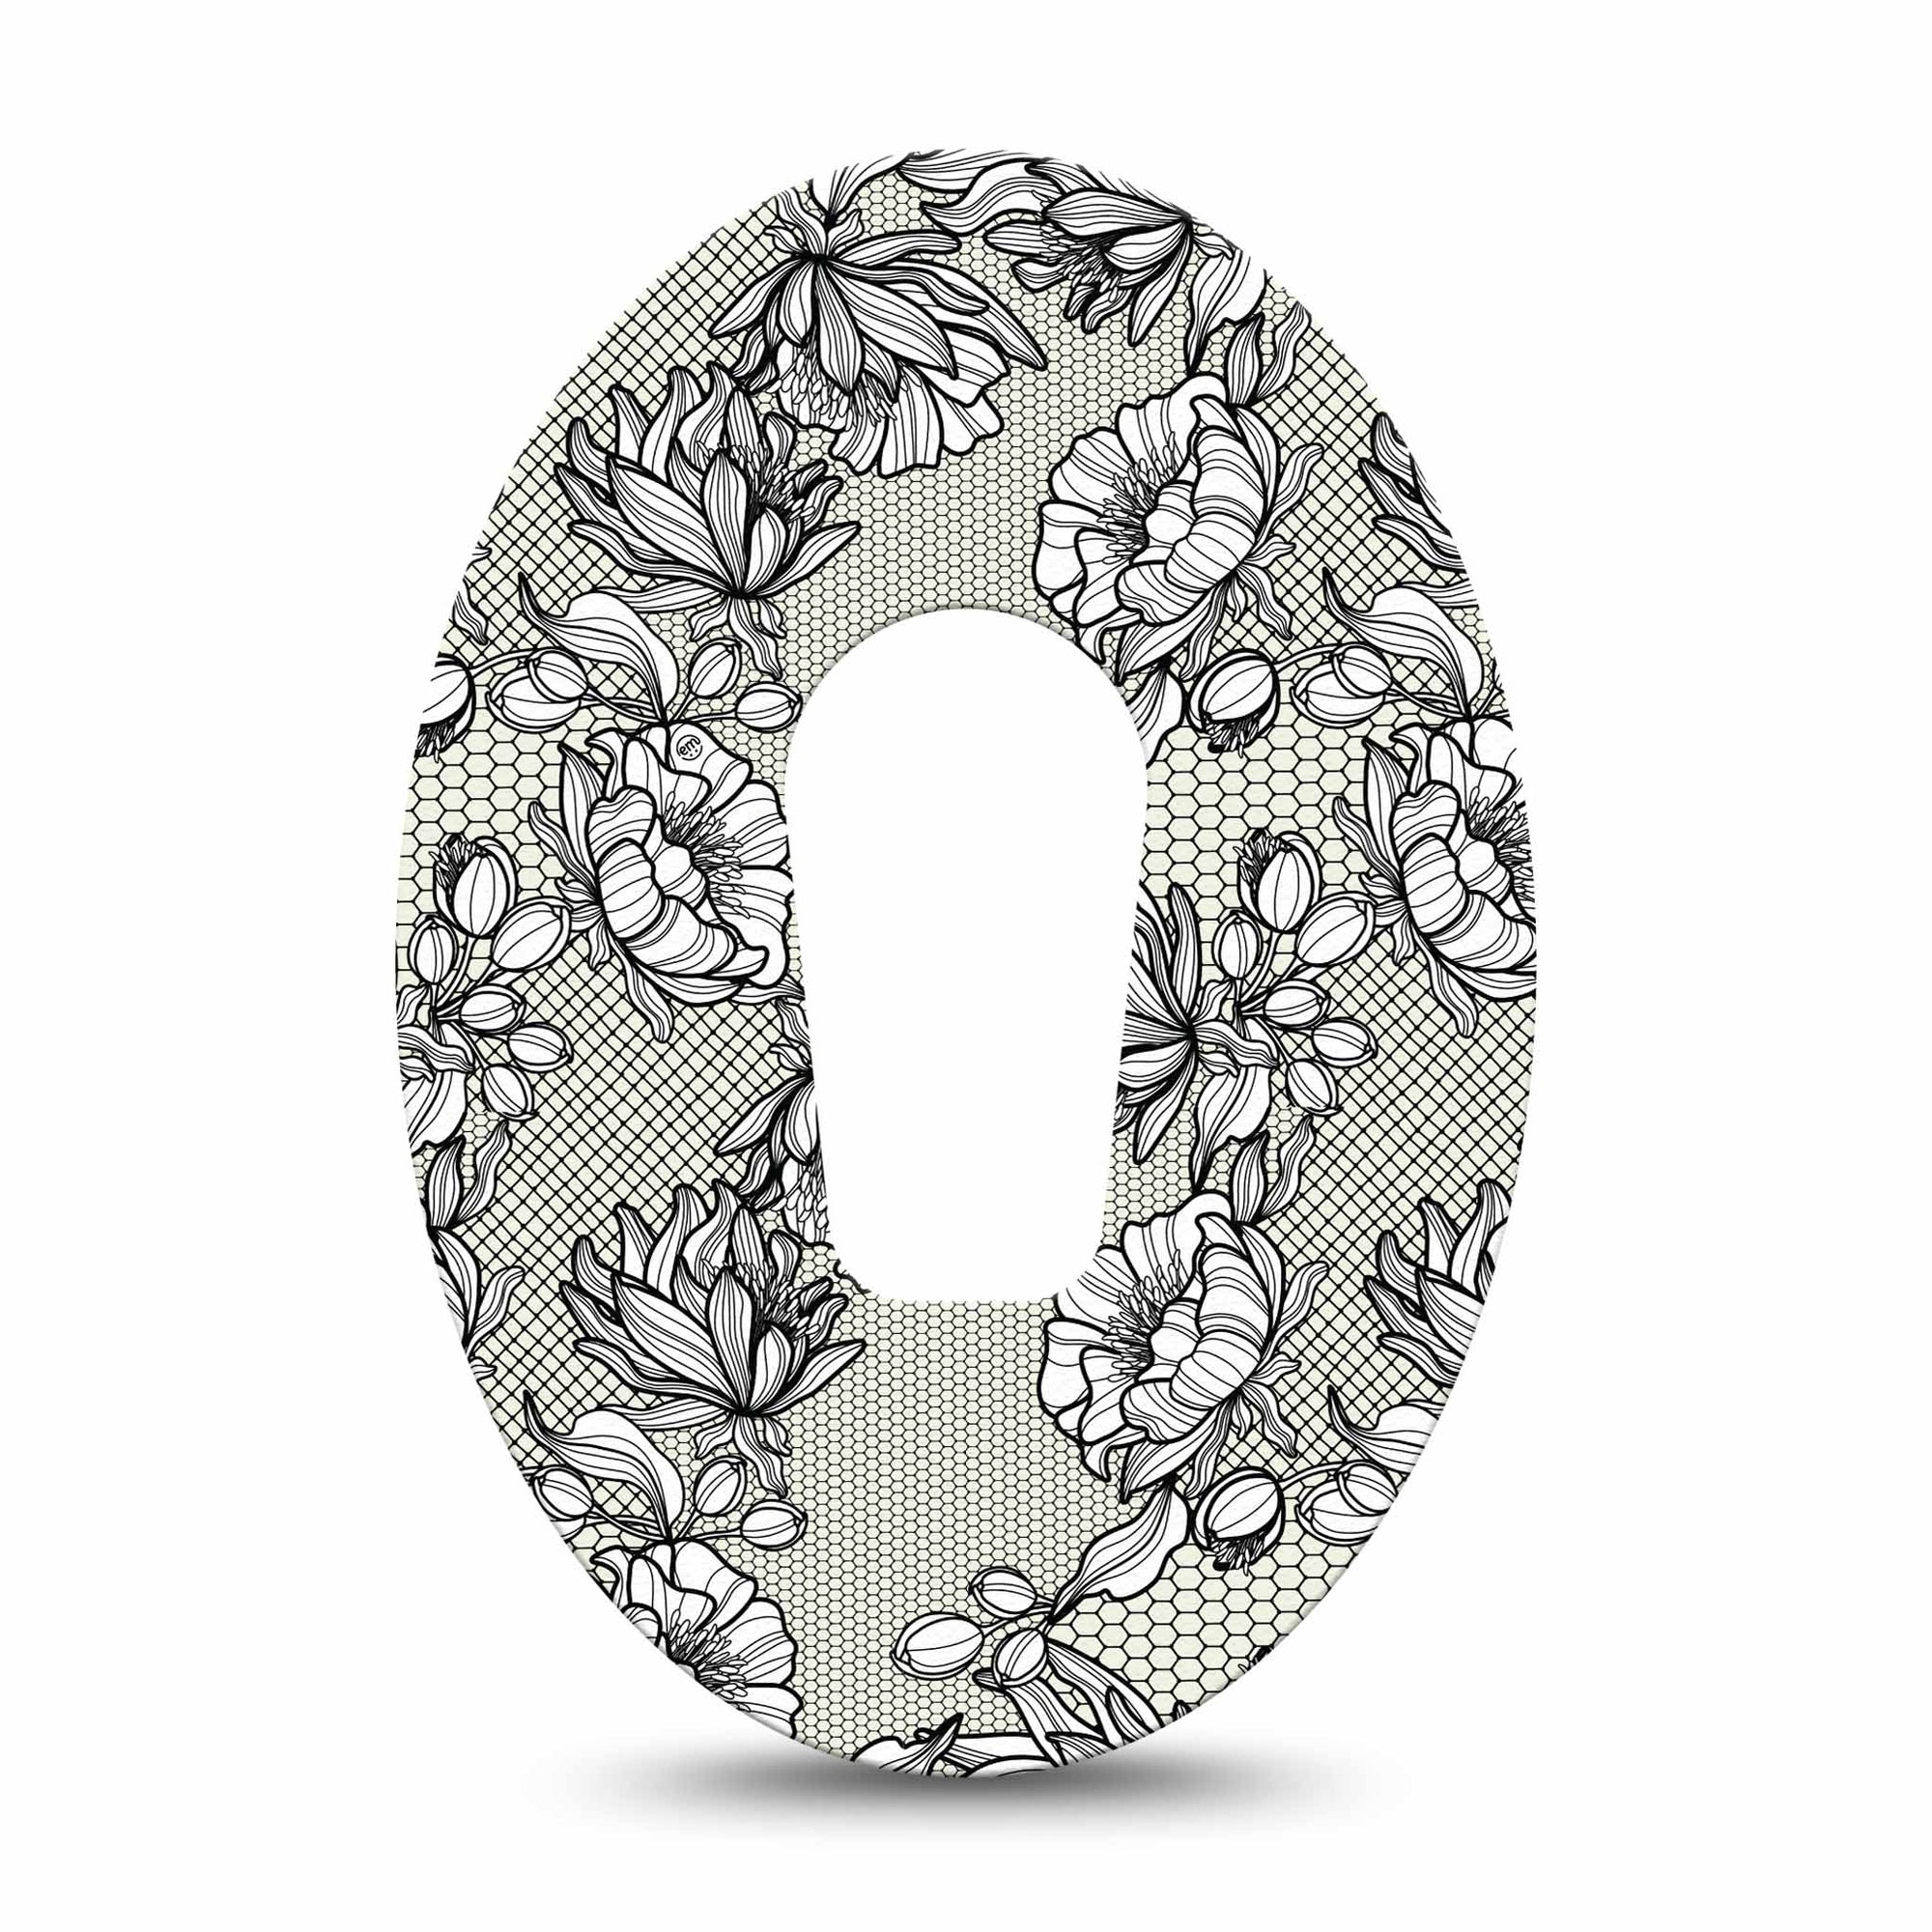 Black Lace Dexcom G6 Patch, single, floral lace themed cgm adhesive tape design